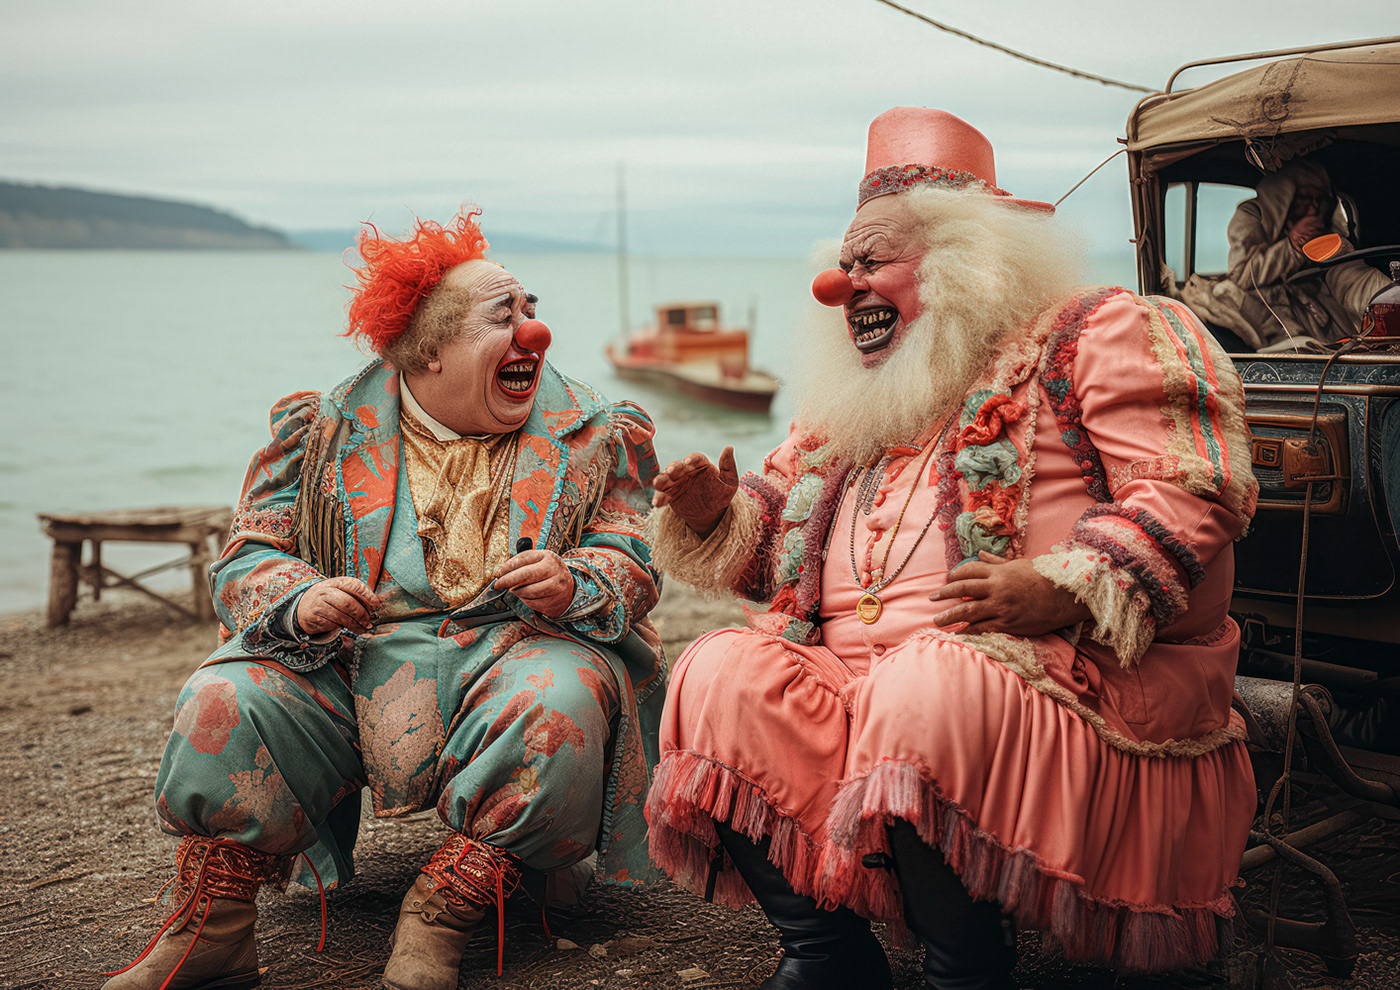 Circus Victorian Seaside ai aiart Entertainment weird english england period drama